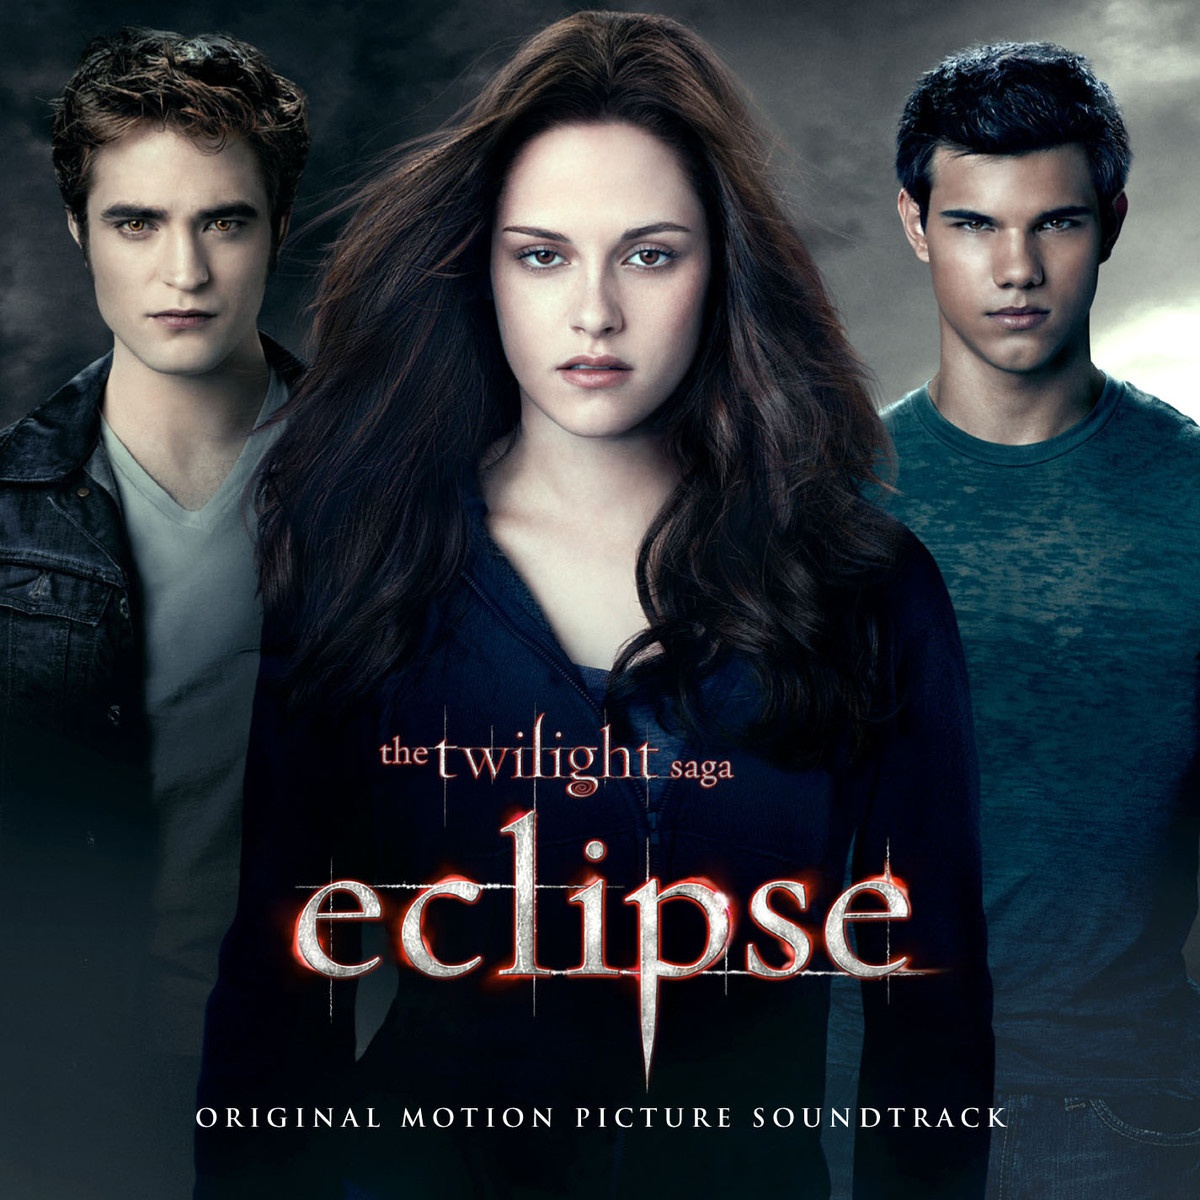 The Twilight Saga: Eclipse (Original Motion Picture Soundtrack)